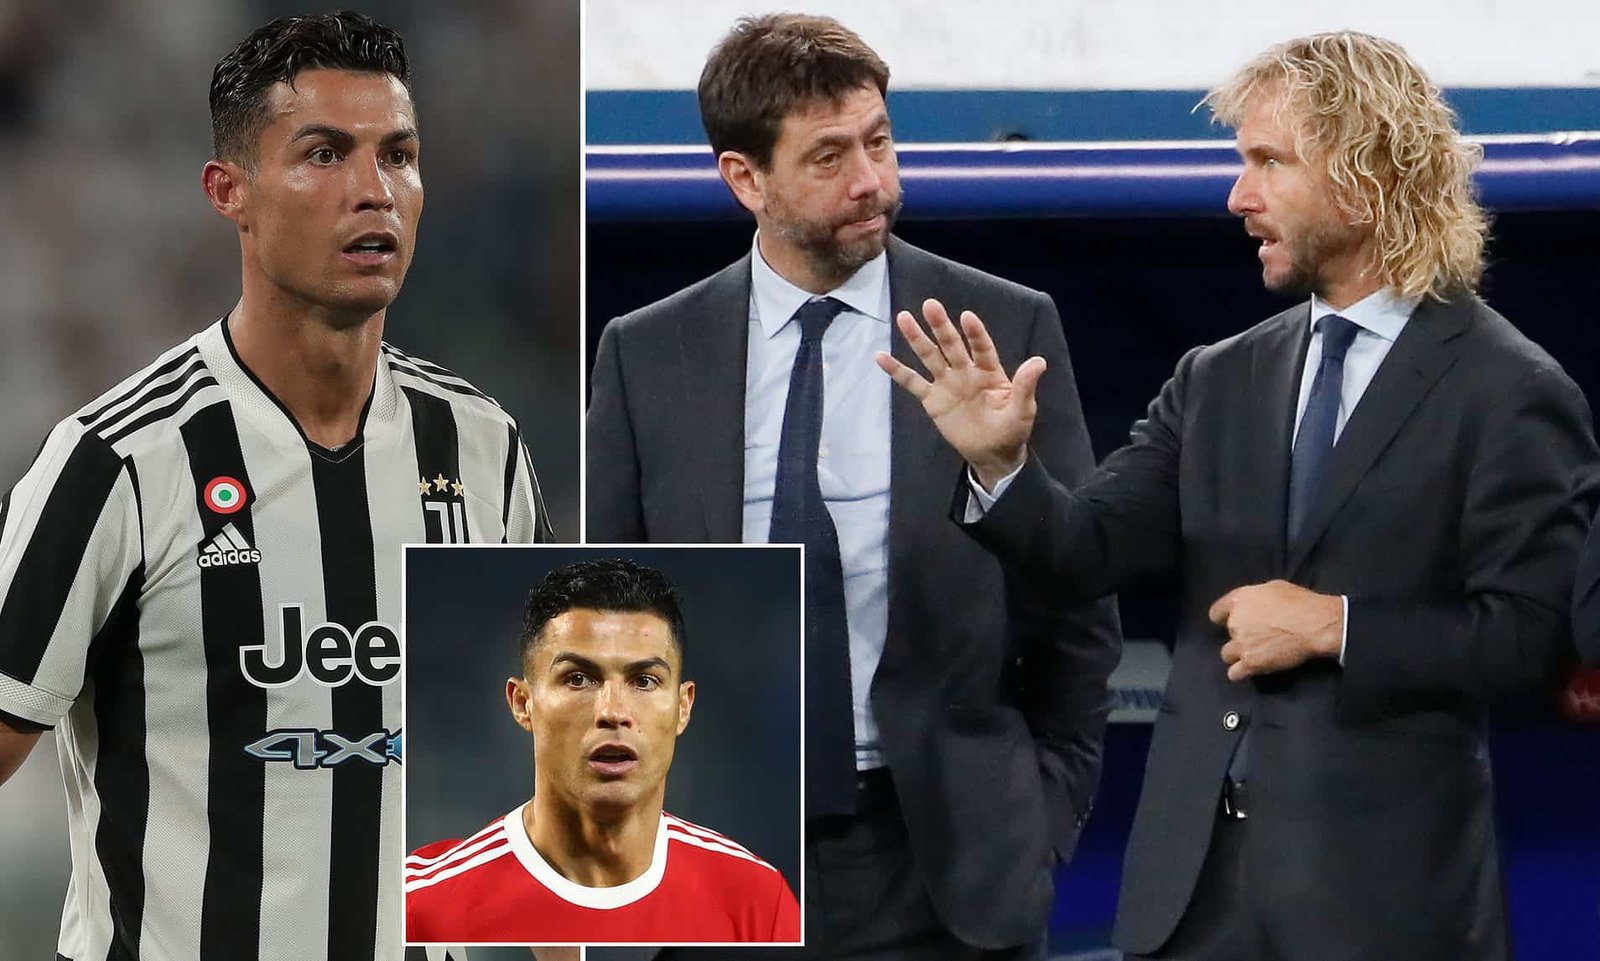 Italian Authorities might question Cristiano Ronaldo over his secret Juventus agreement